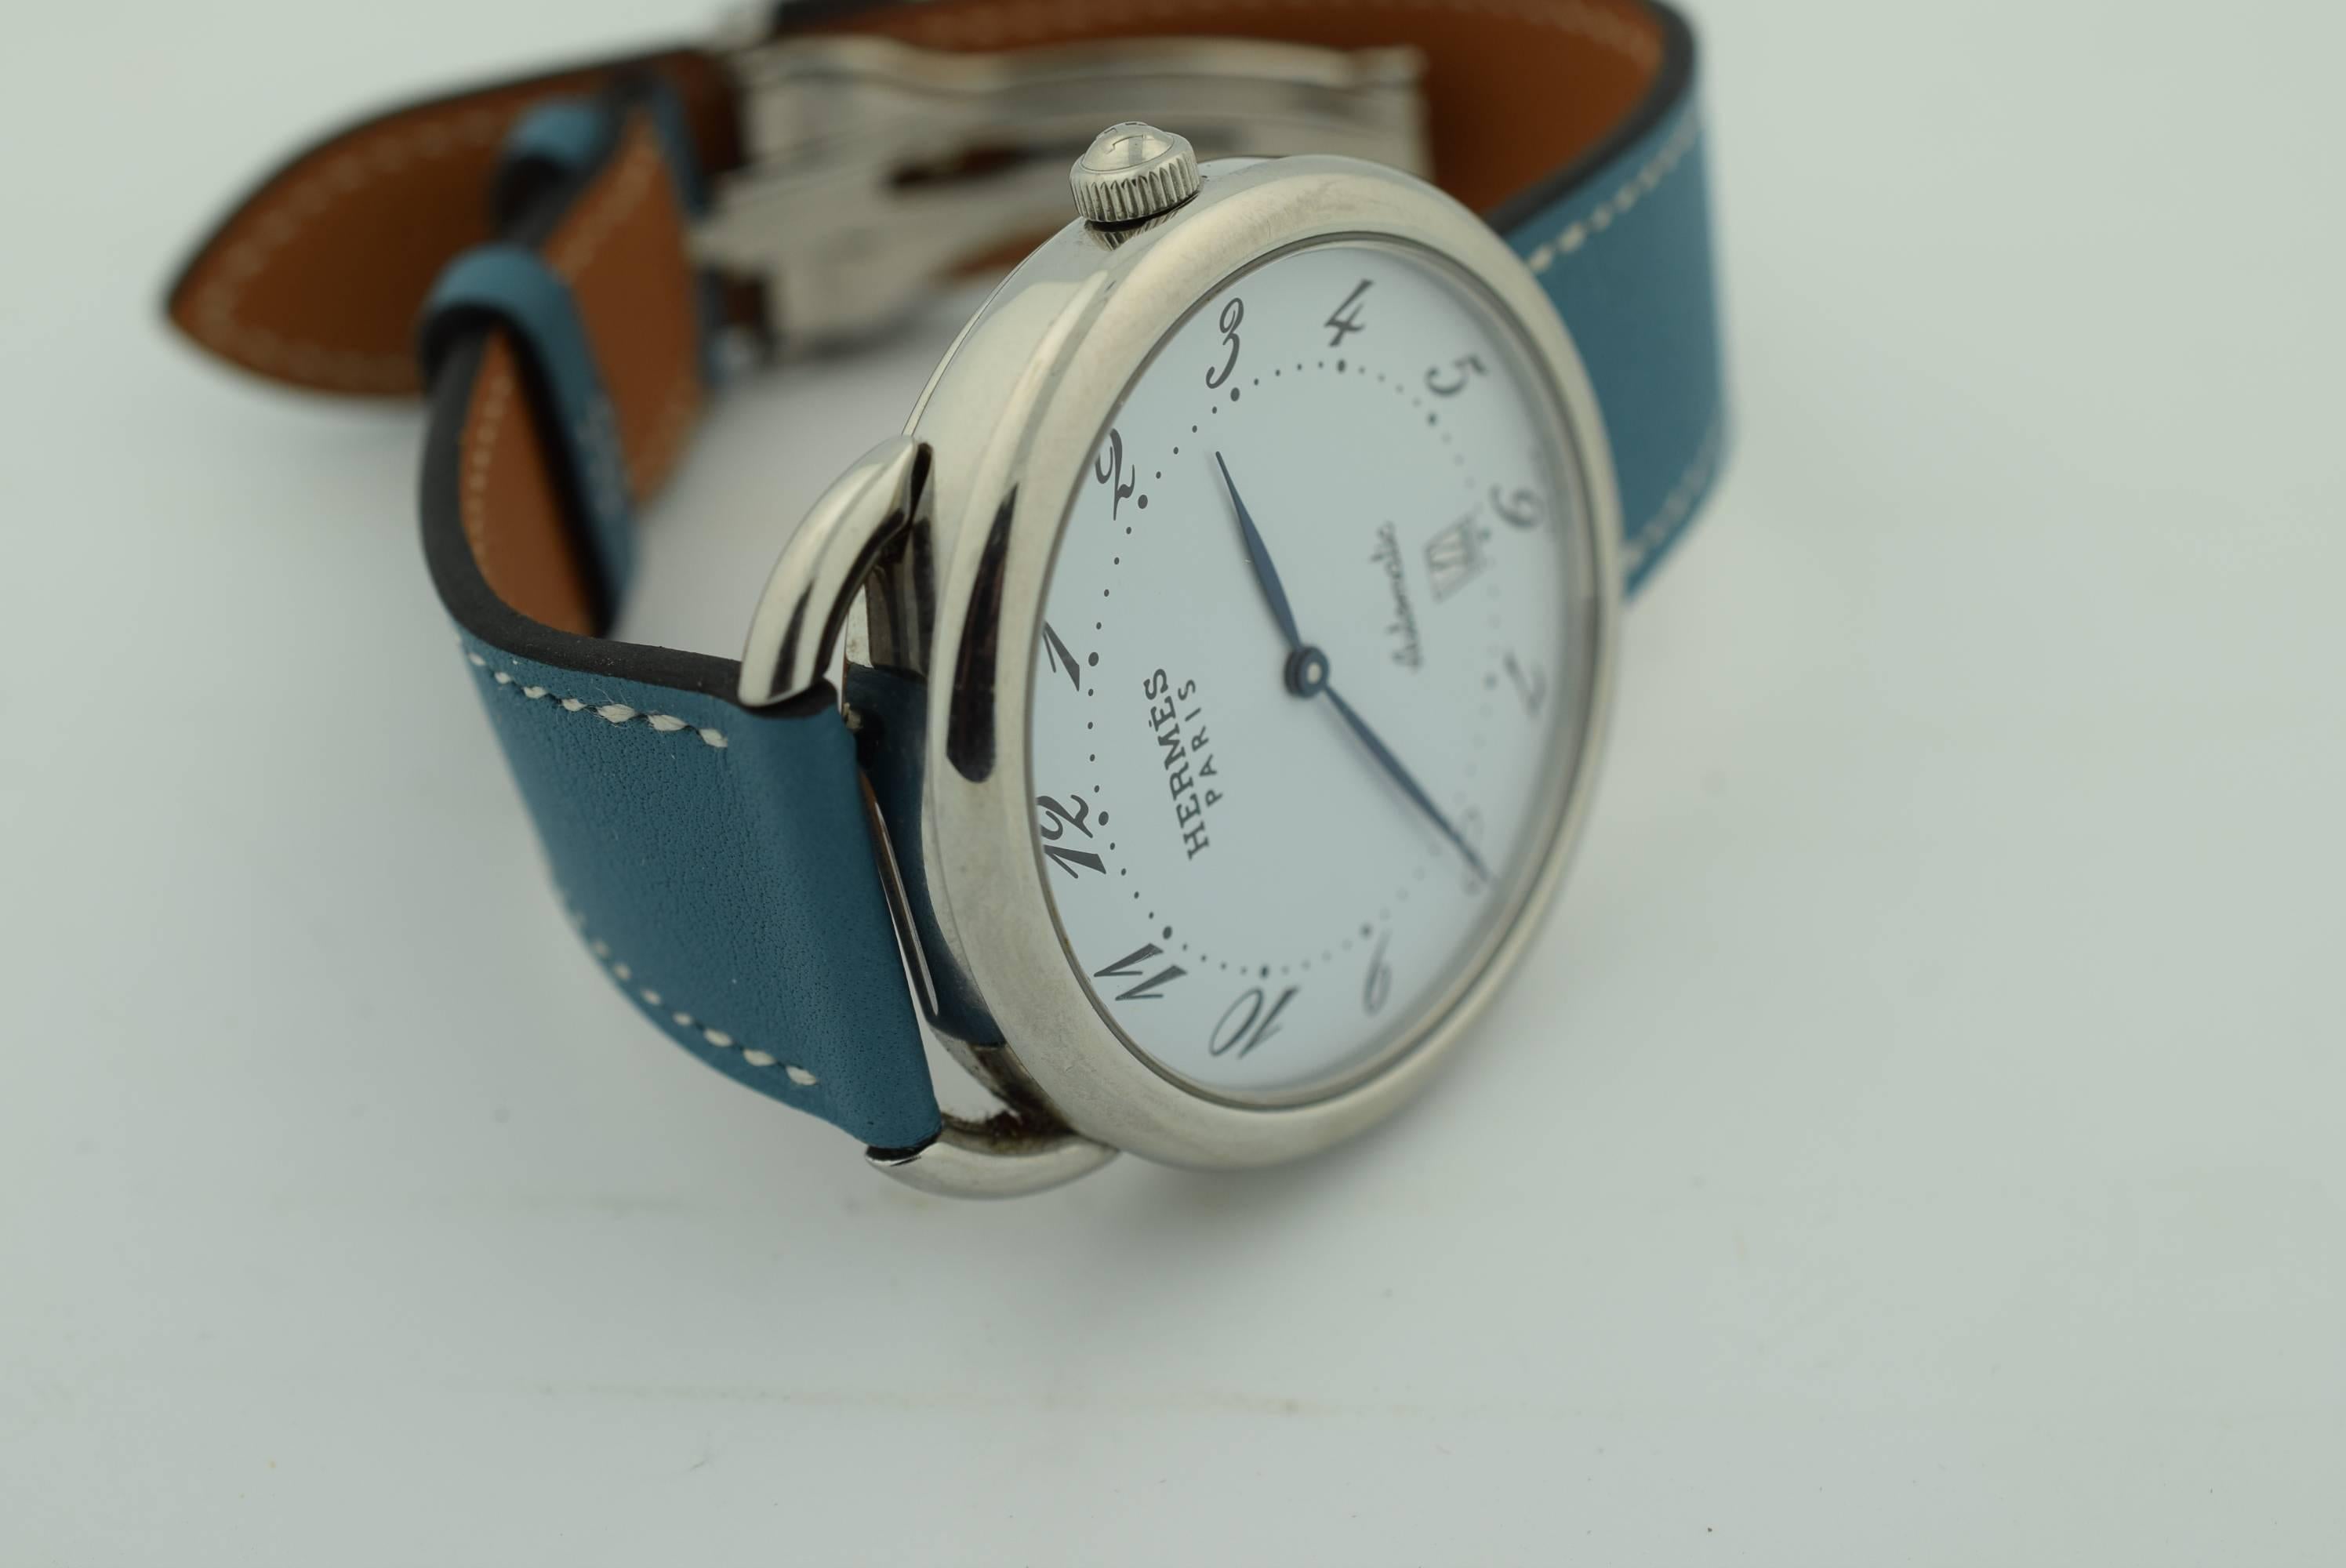 Hermes Stainless Steel Arceau Wristwatch Ref AR4.810 4